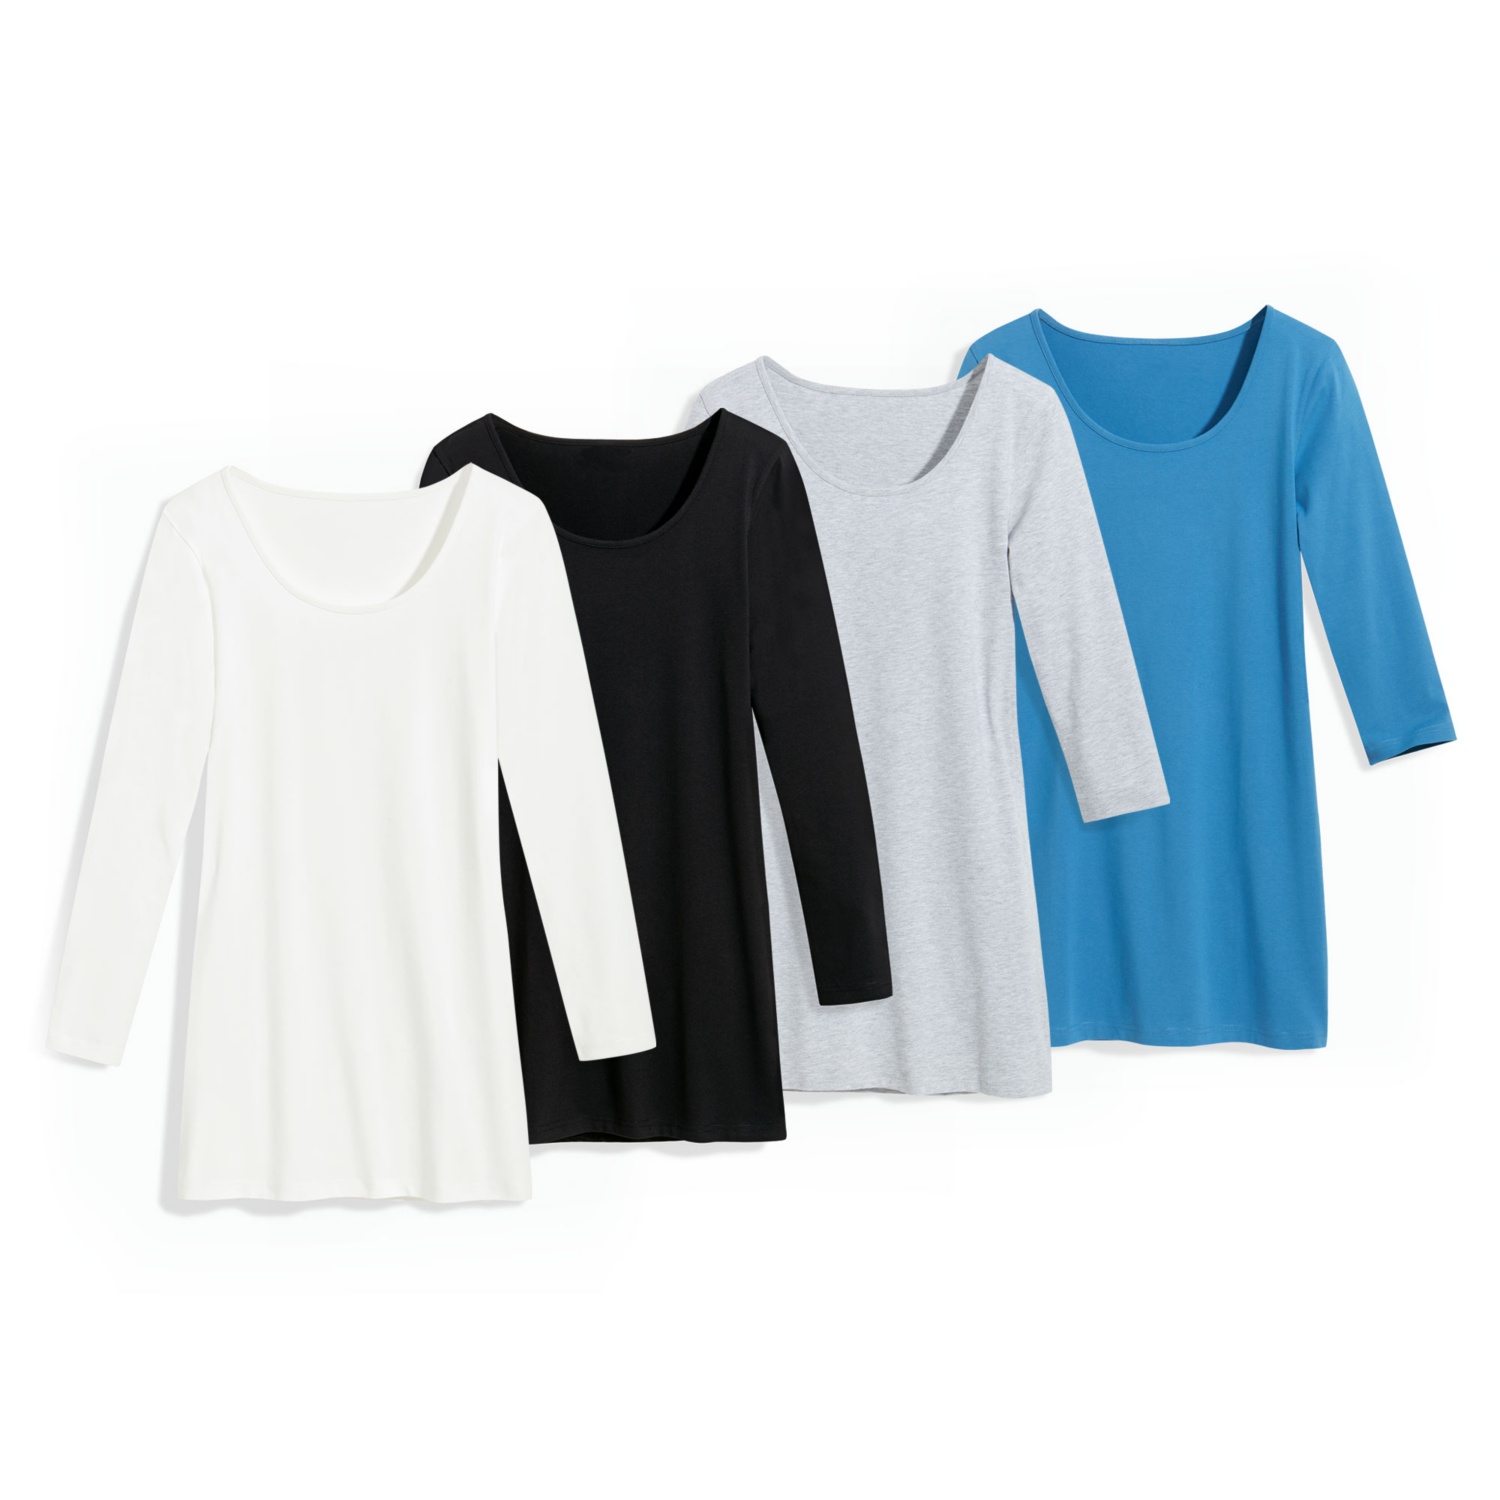 BLUE MOTION Damen-Longshirt